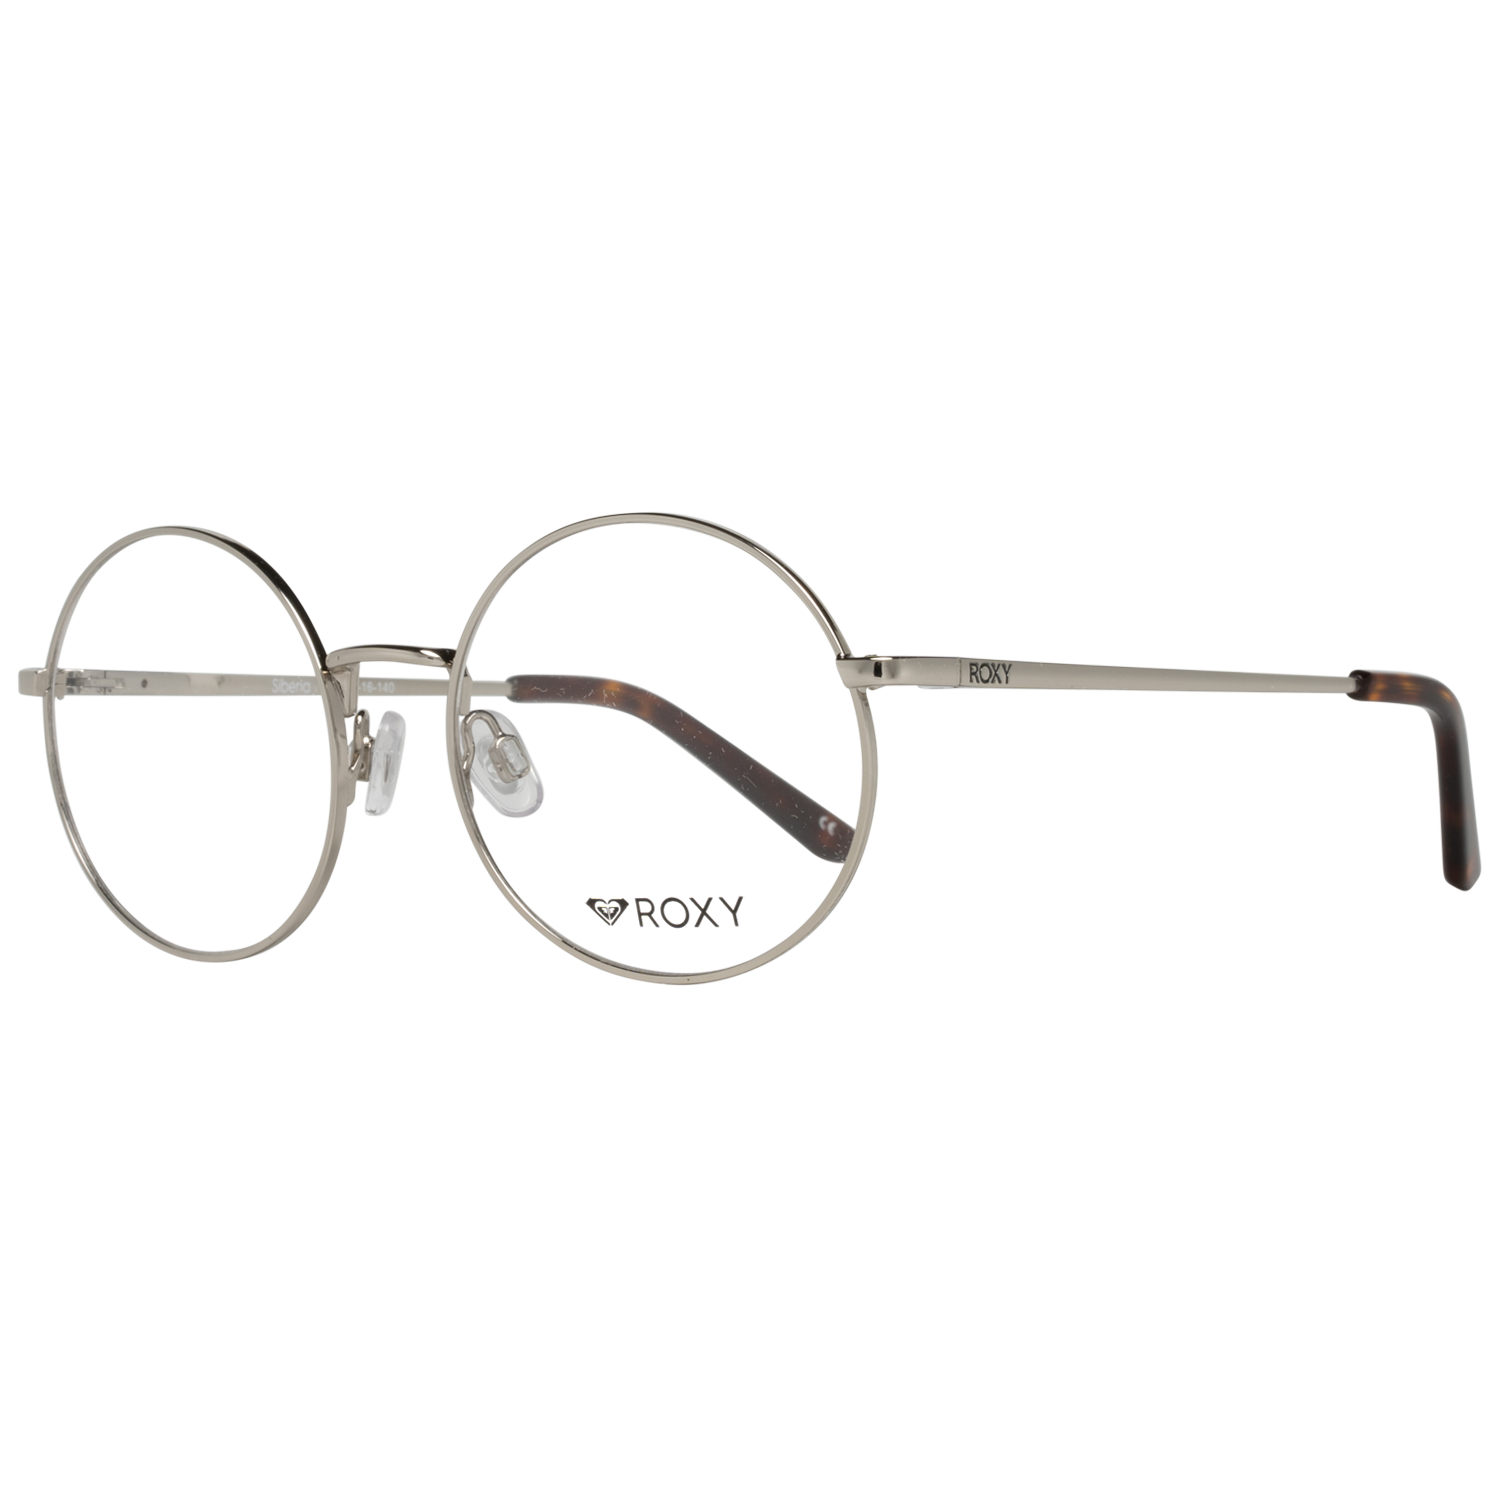 Roxy Frames Roxy Glasses Optical Frame ERJEG03034 SJA0 49 Eyeglasses Eyewear UK USA Australia 